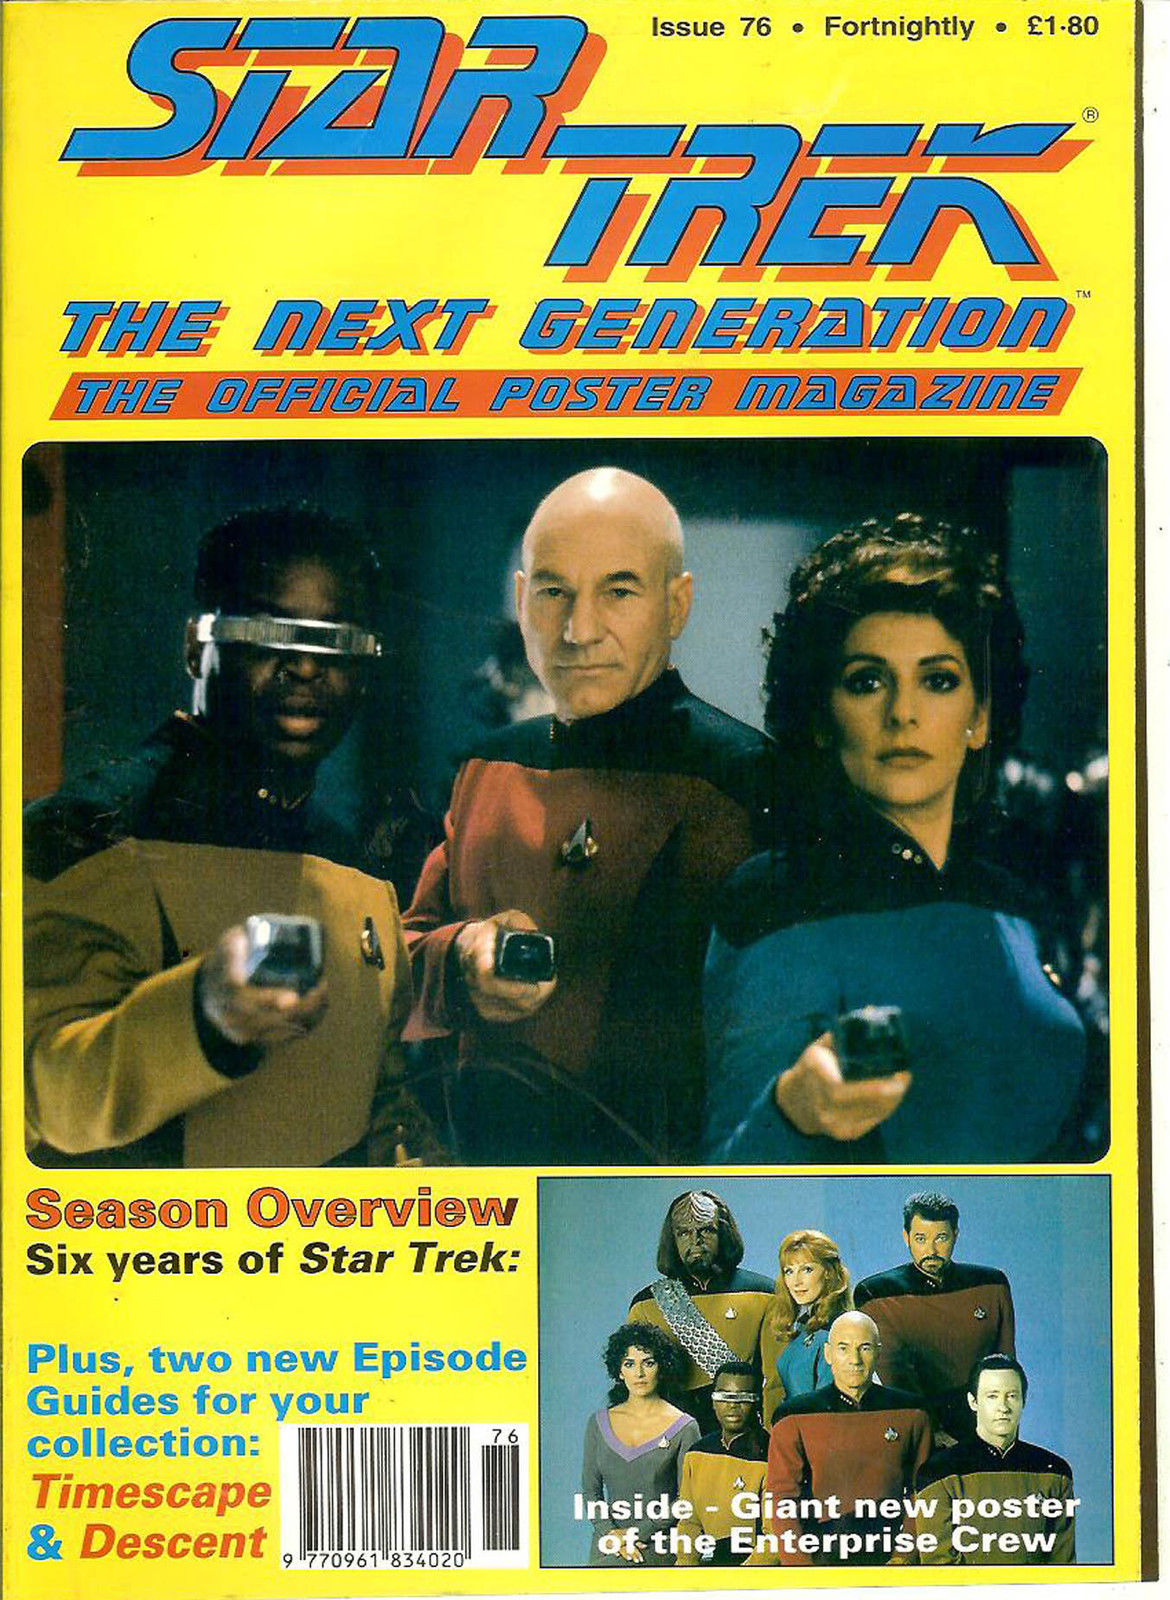 Star Trek: The Next Generation Poster Magazine #76